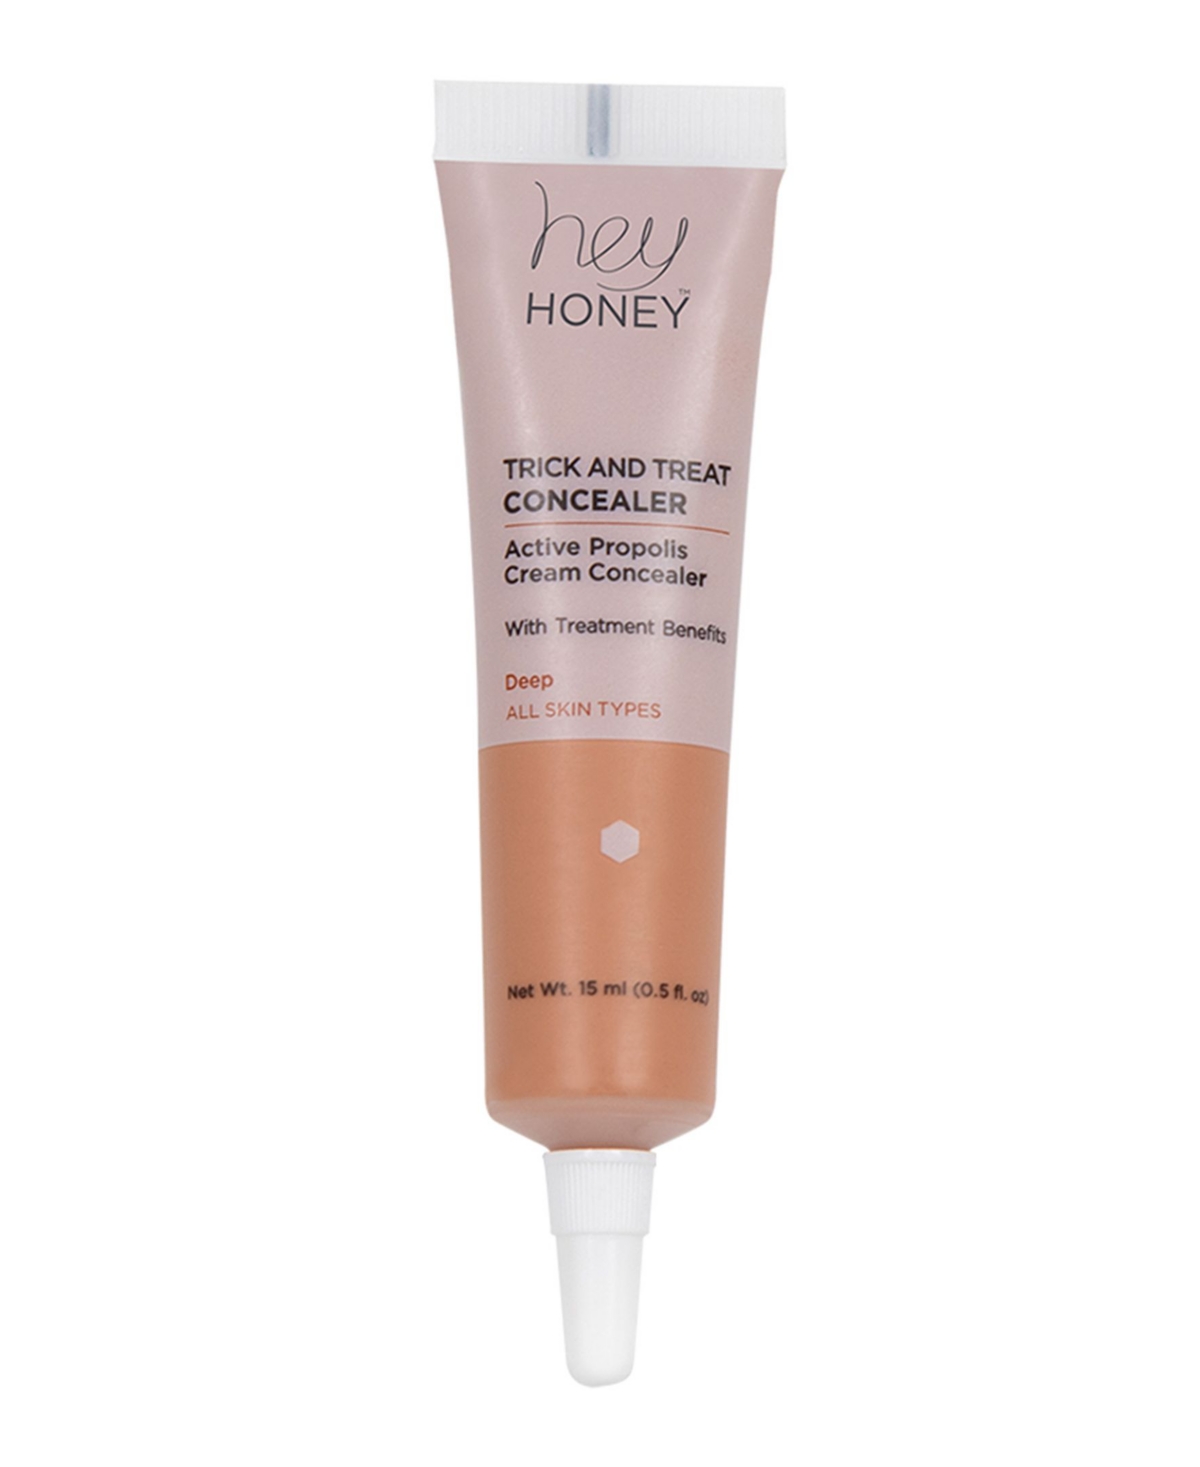 Hey Honey Trick and Treat Active Propolis Cream Concealer, 15 ml